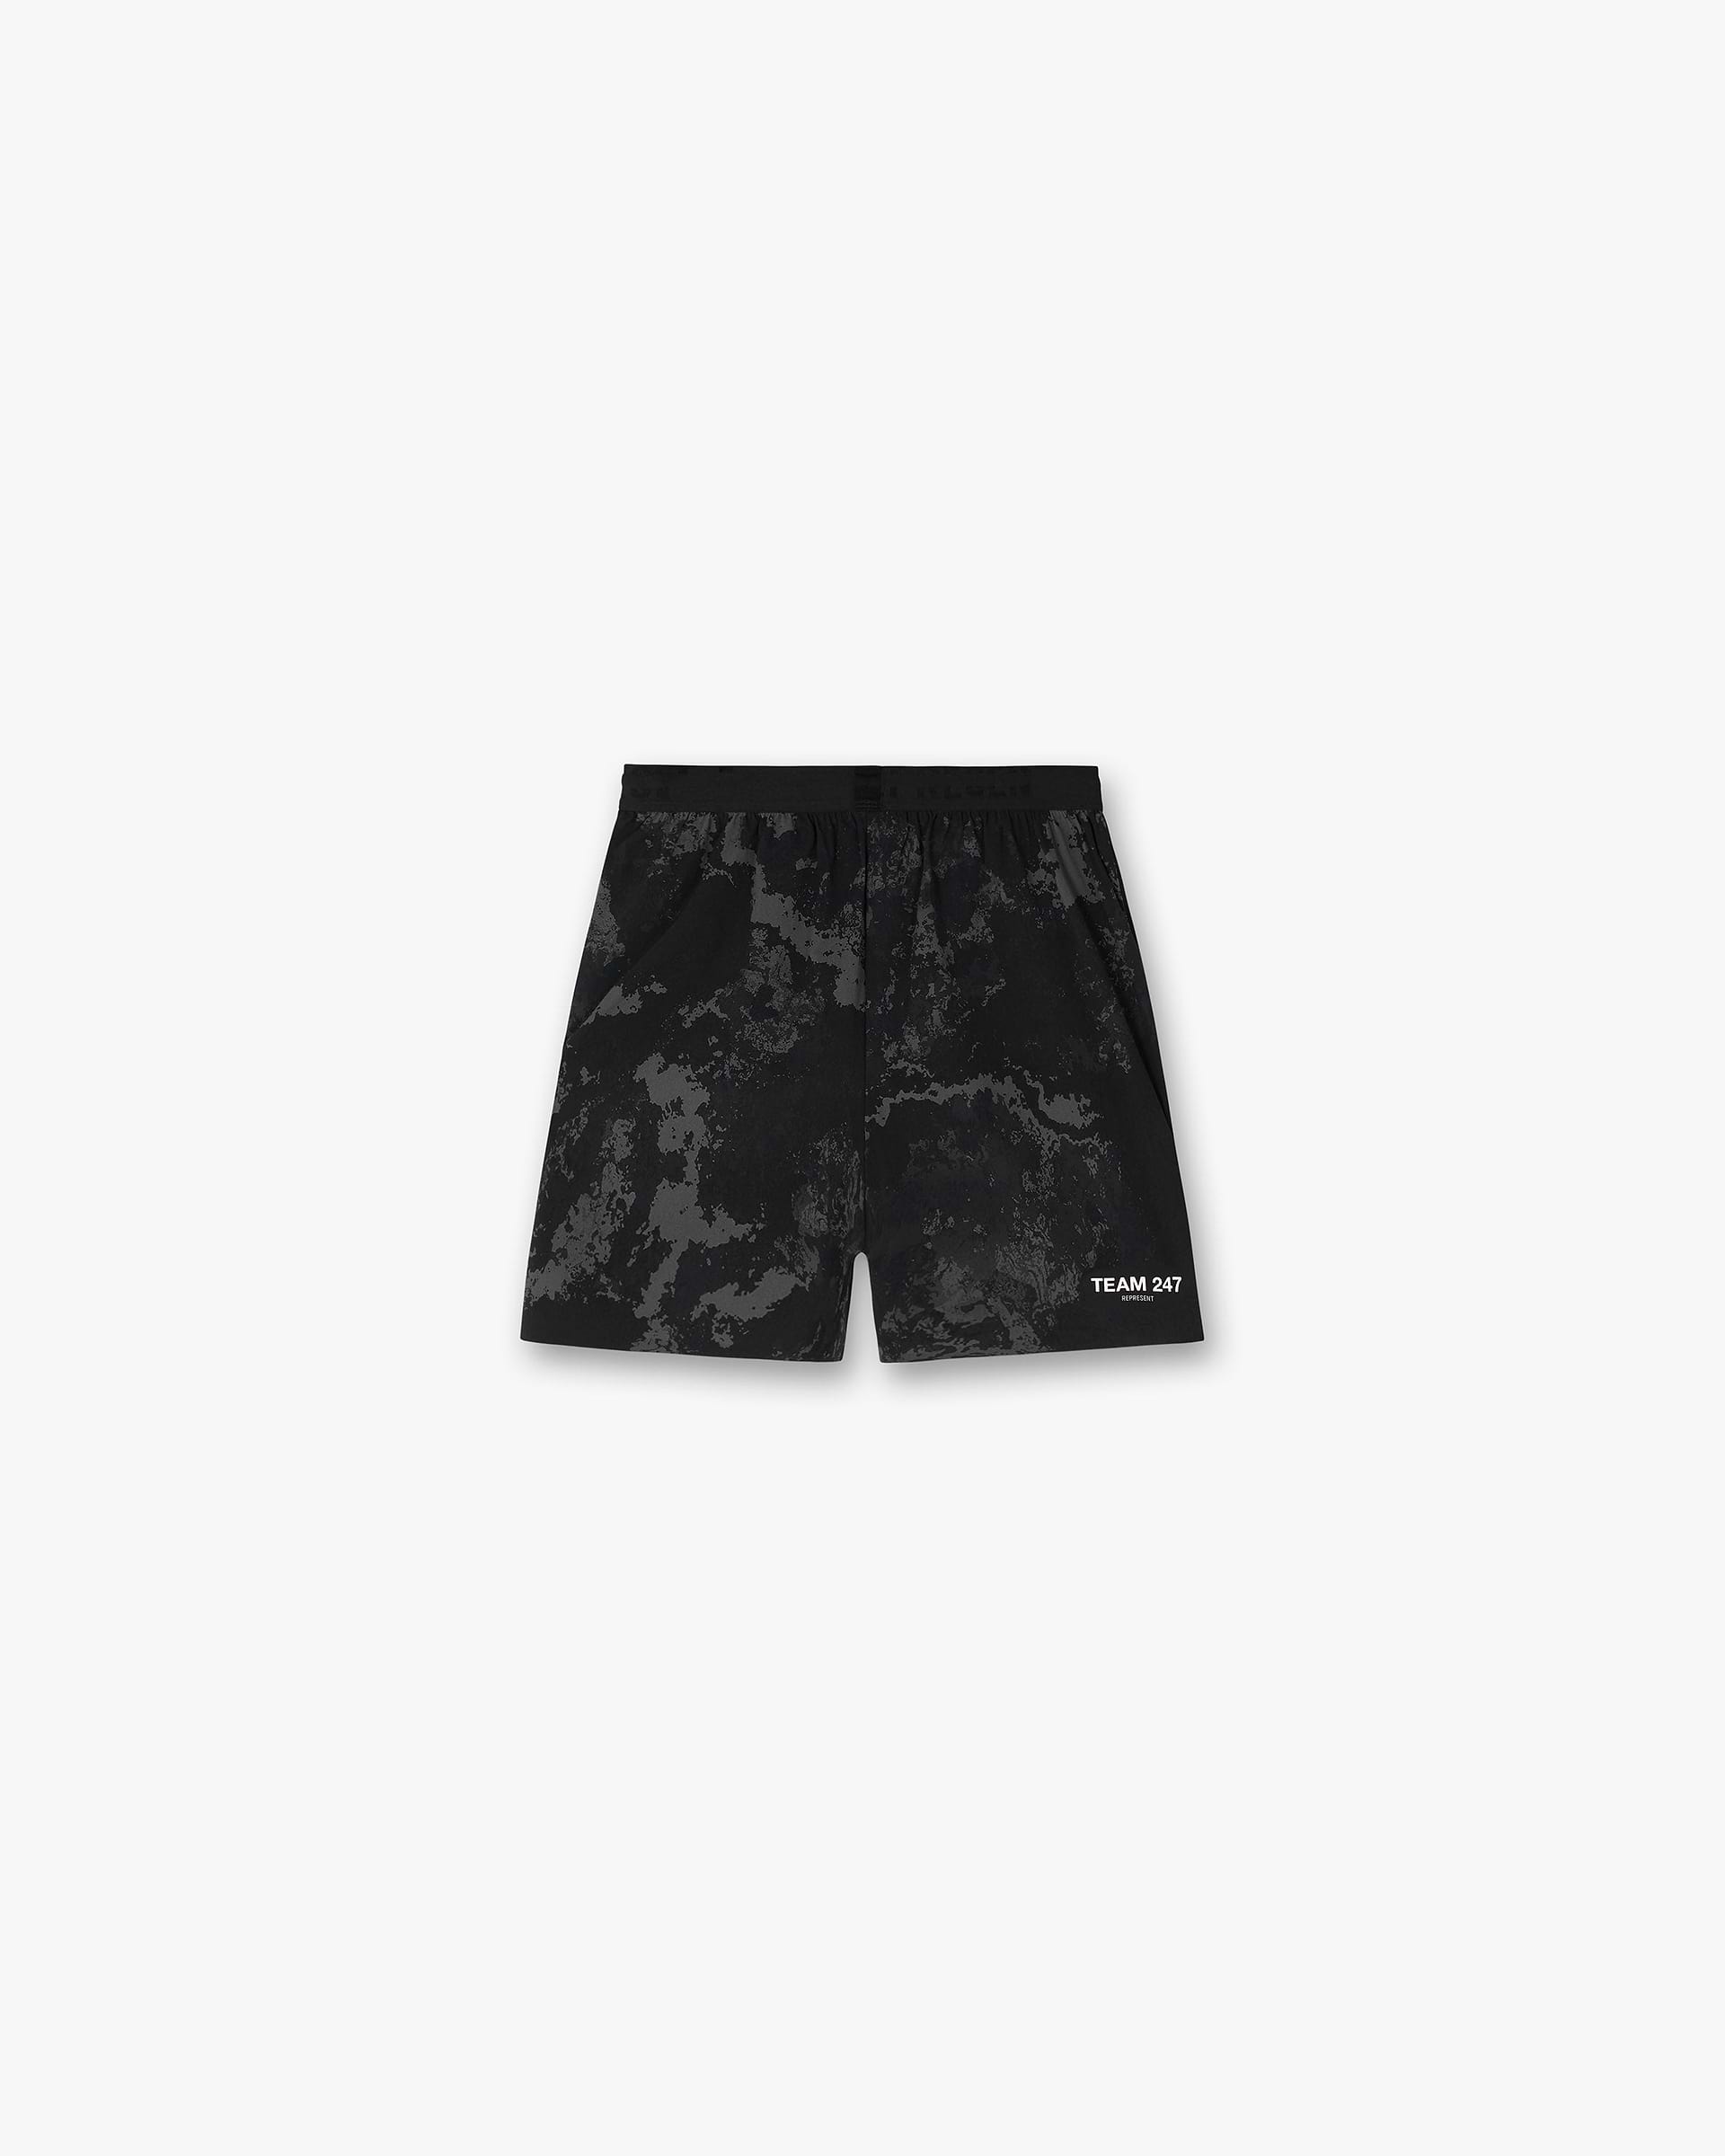 Team 247 Fused Shorts | Black Camo Shorts 247 | Represent Clo